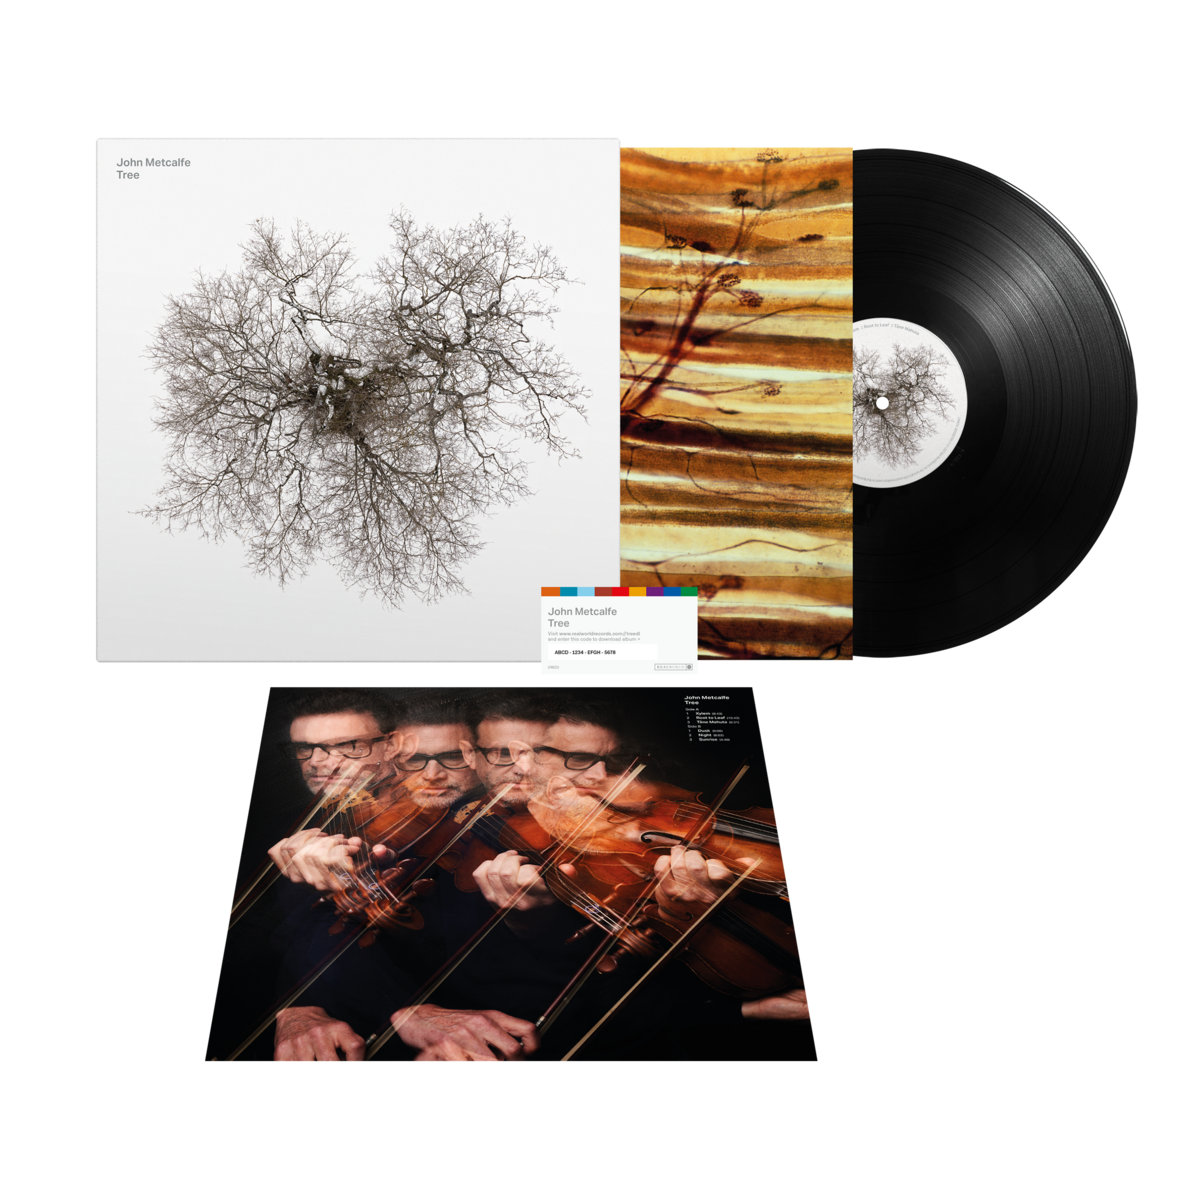 Tree: Vinyl LP